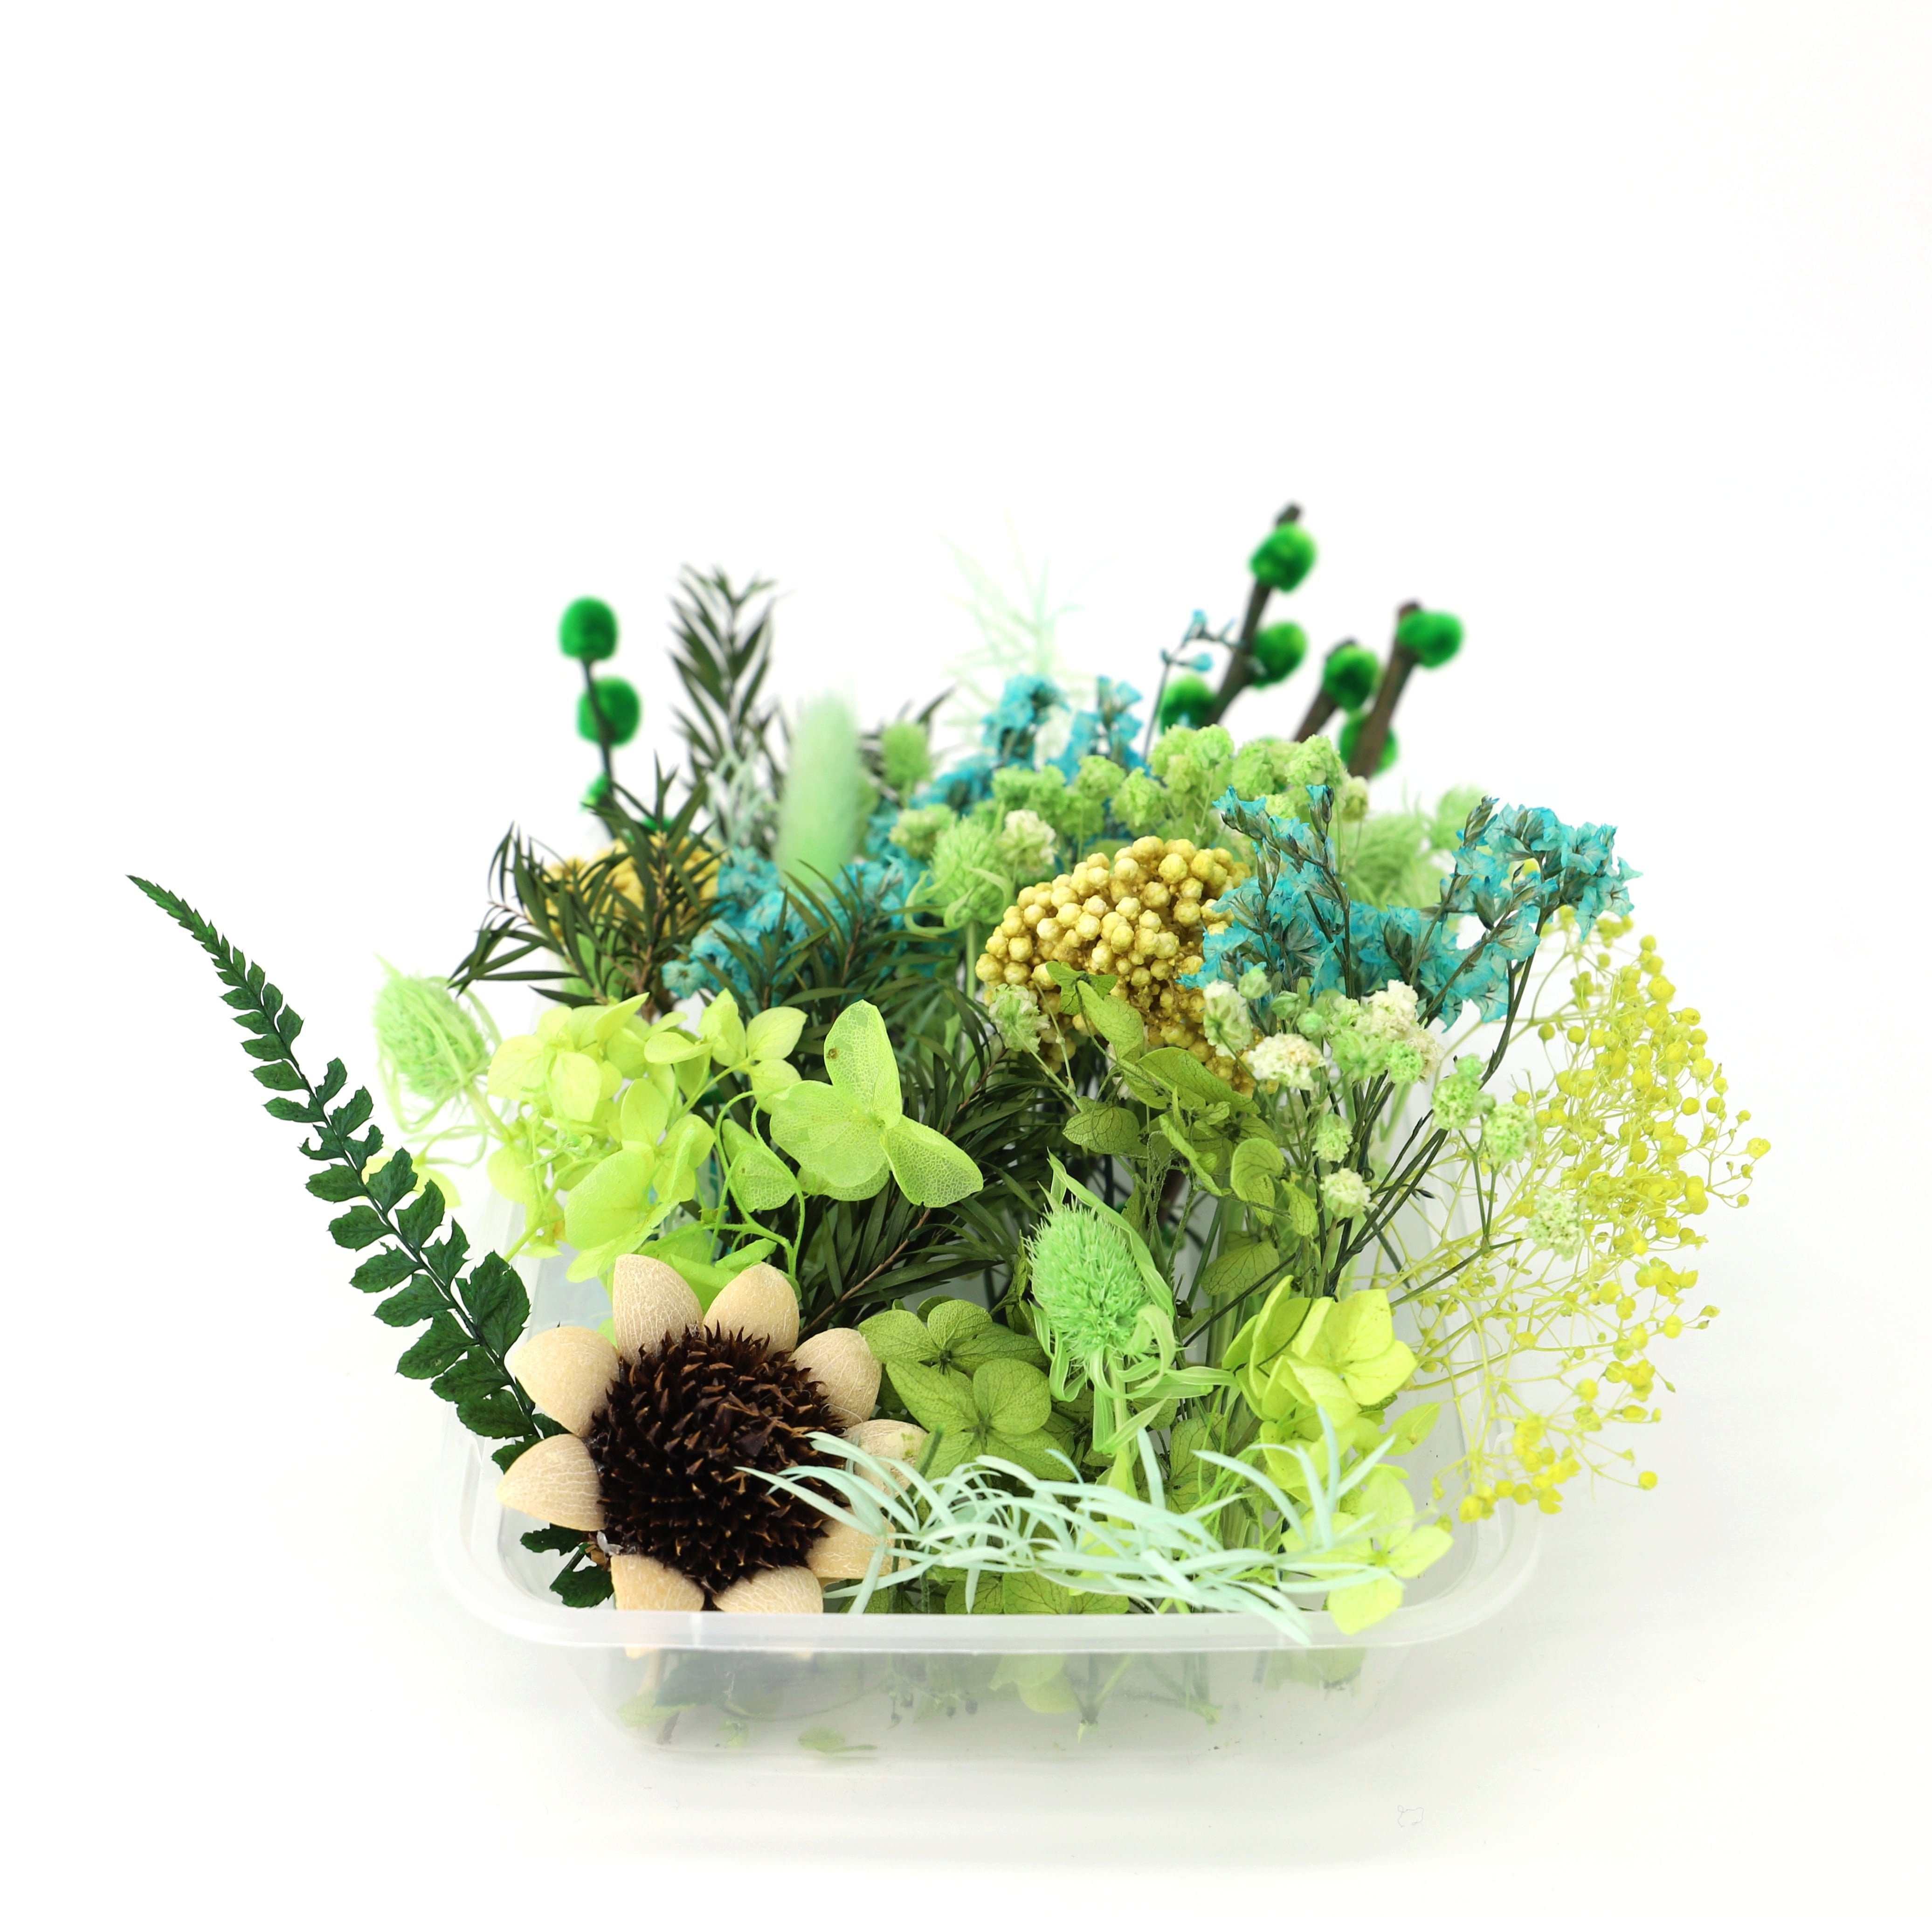 Farblich Box Trockenblume mit Kunstharz.Art - Blumen Pink, getrockneten sortierte